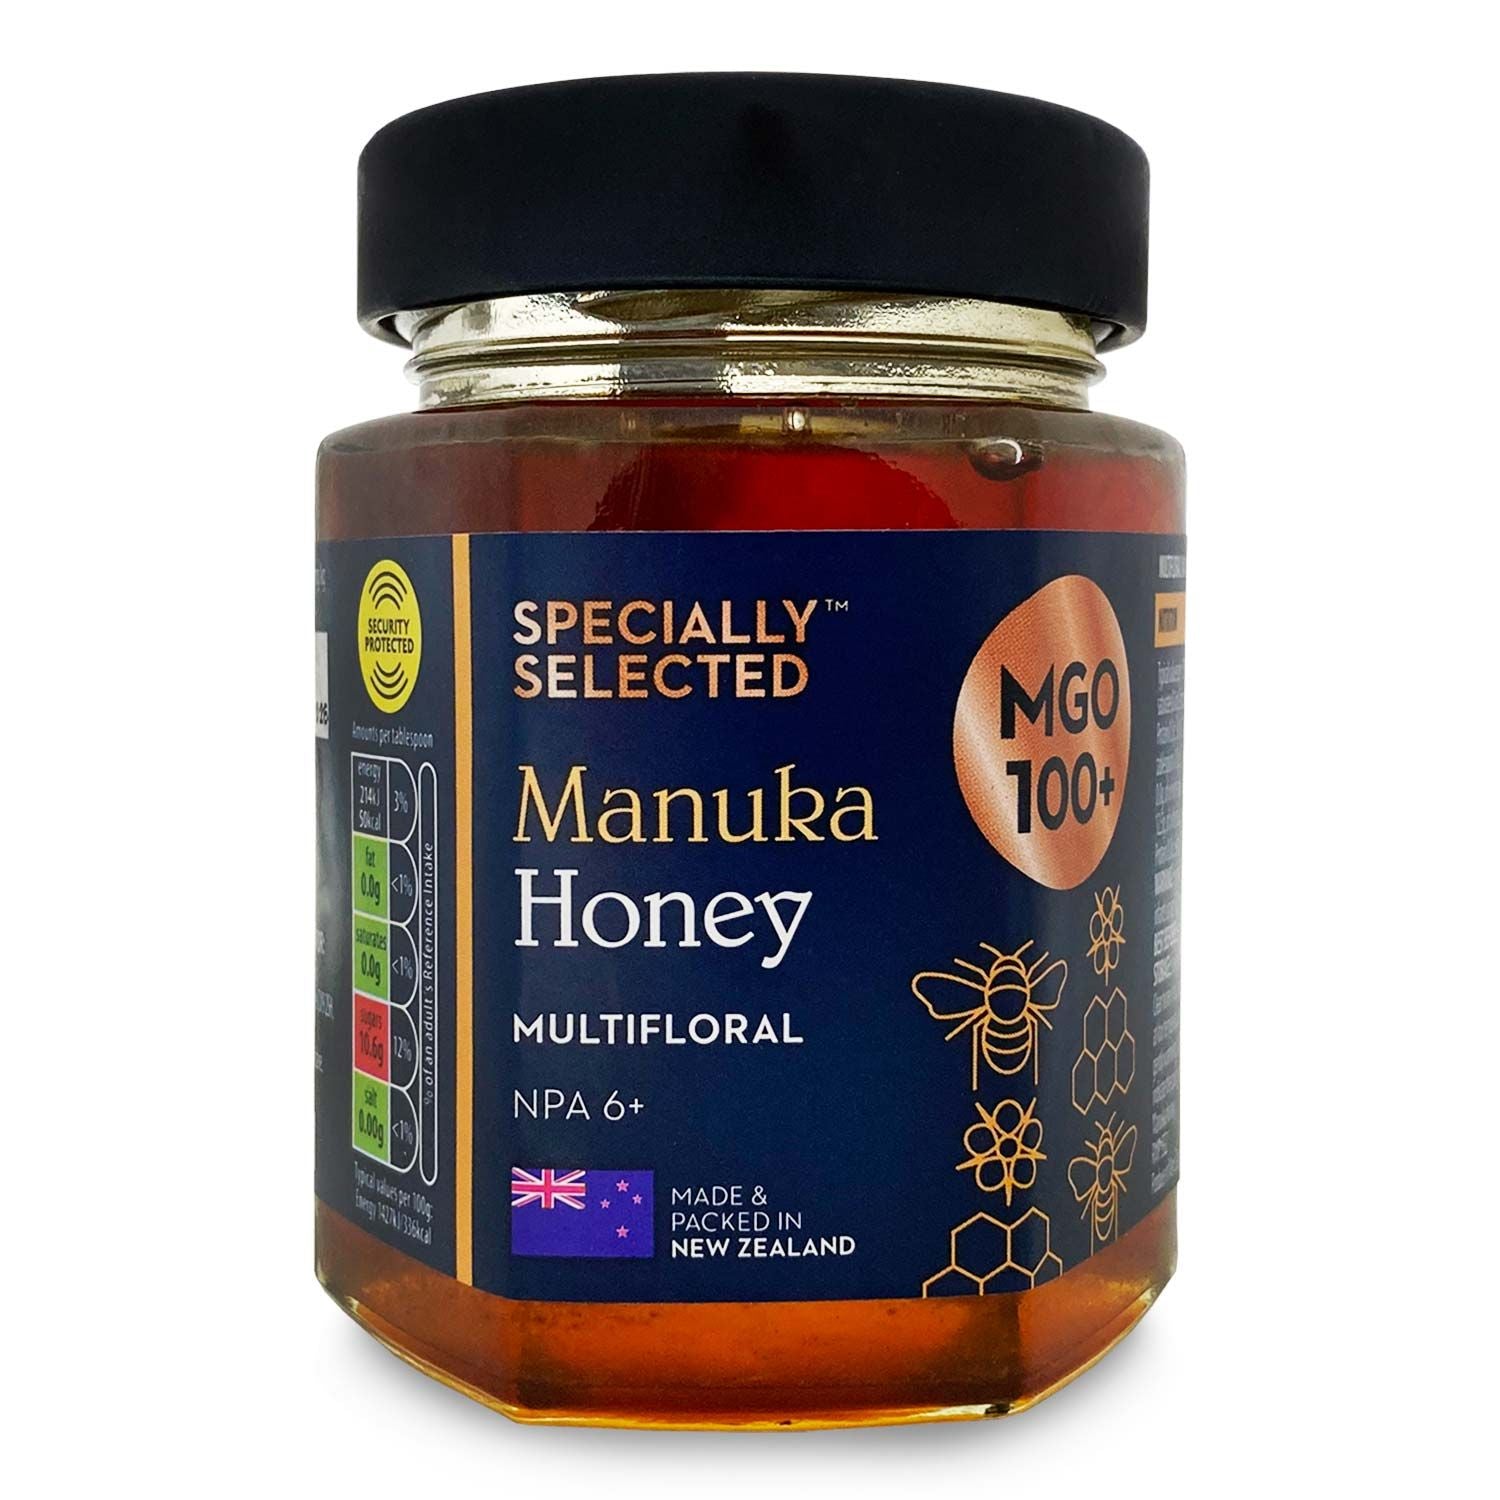 Specially Selected Multifloral Manuka Honey Mgo 100+ Npa 6+ 225g